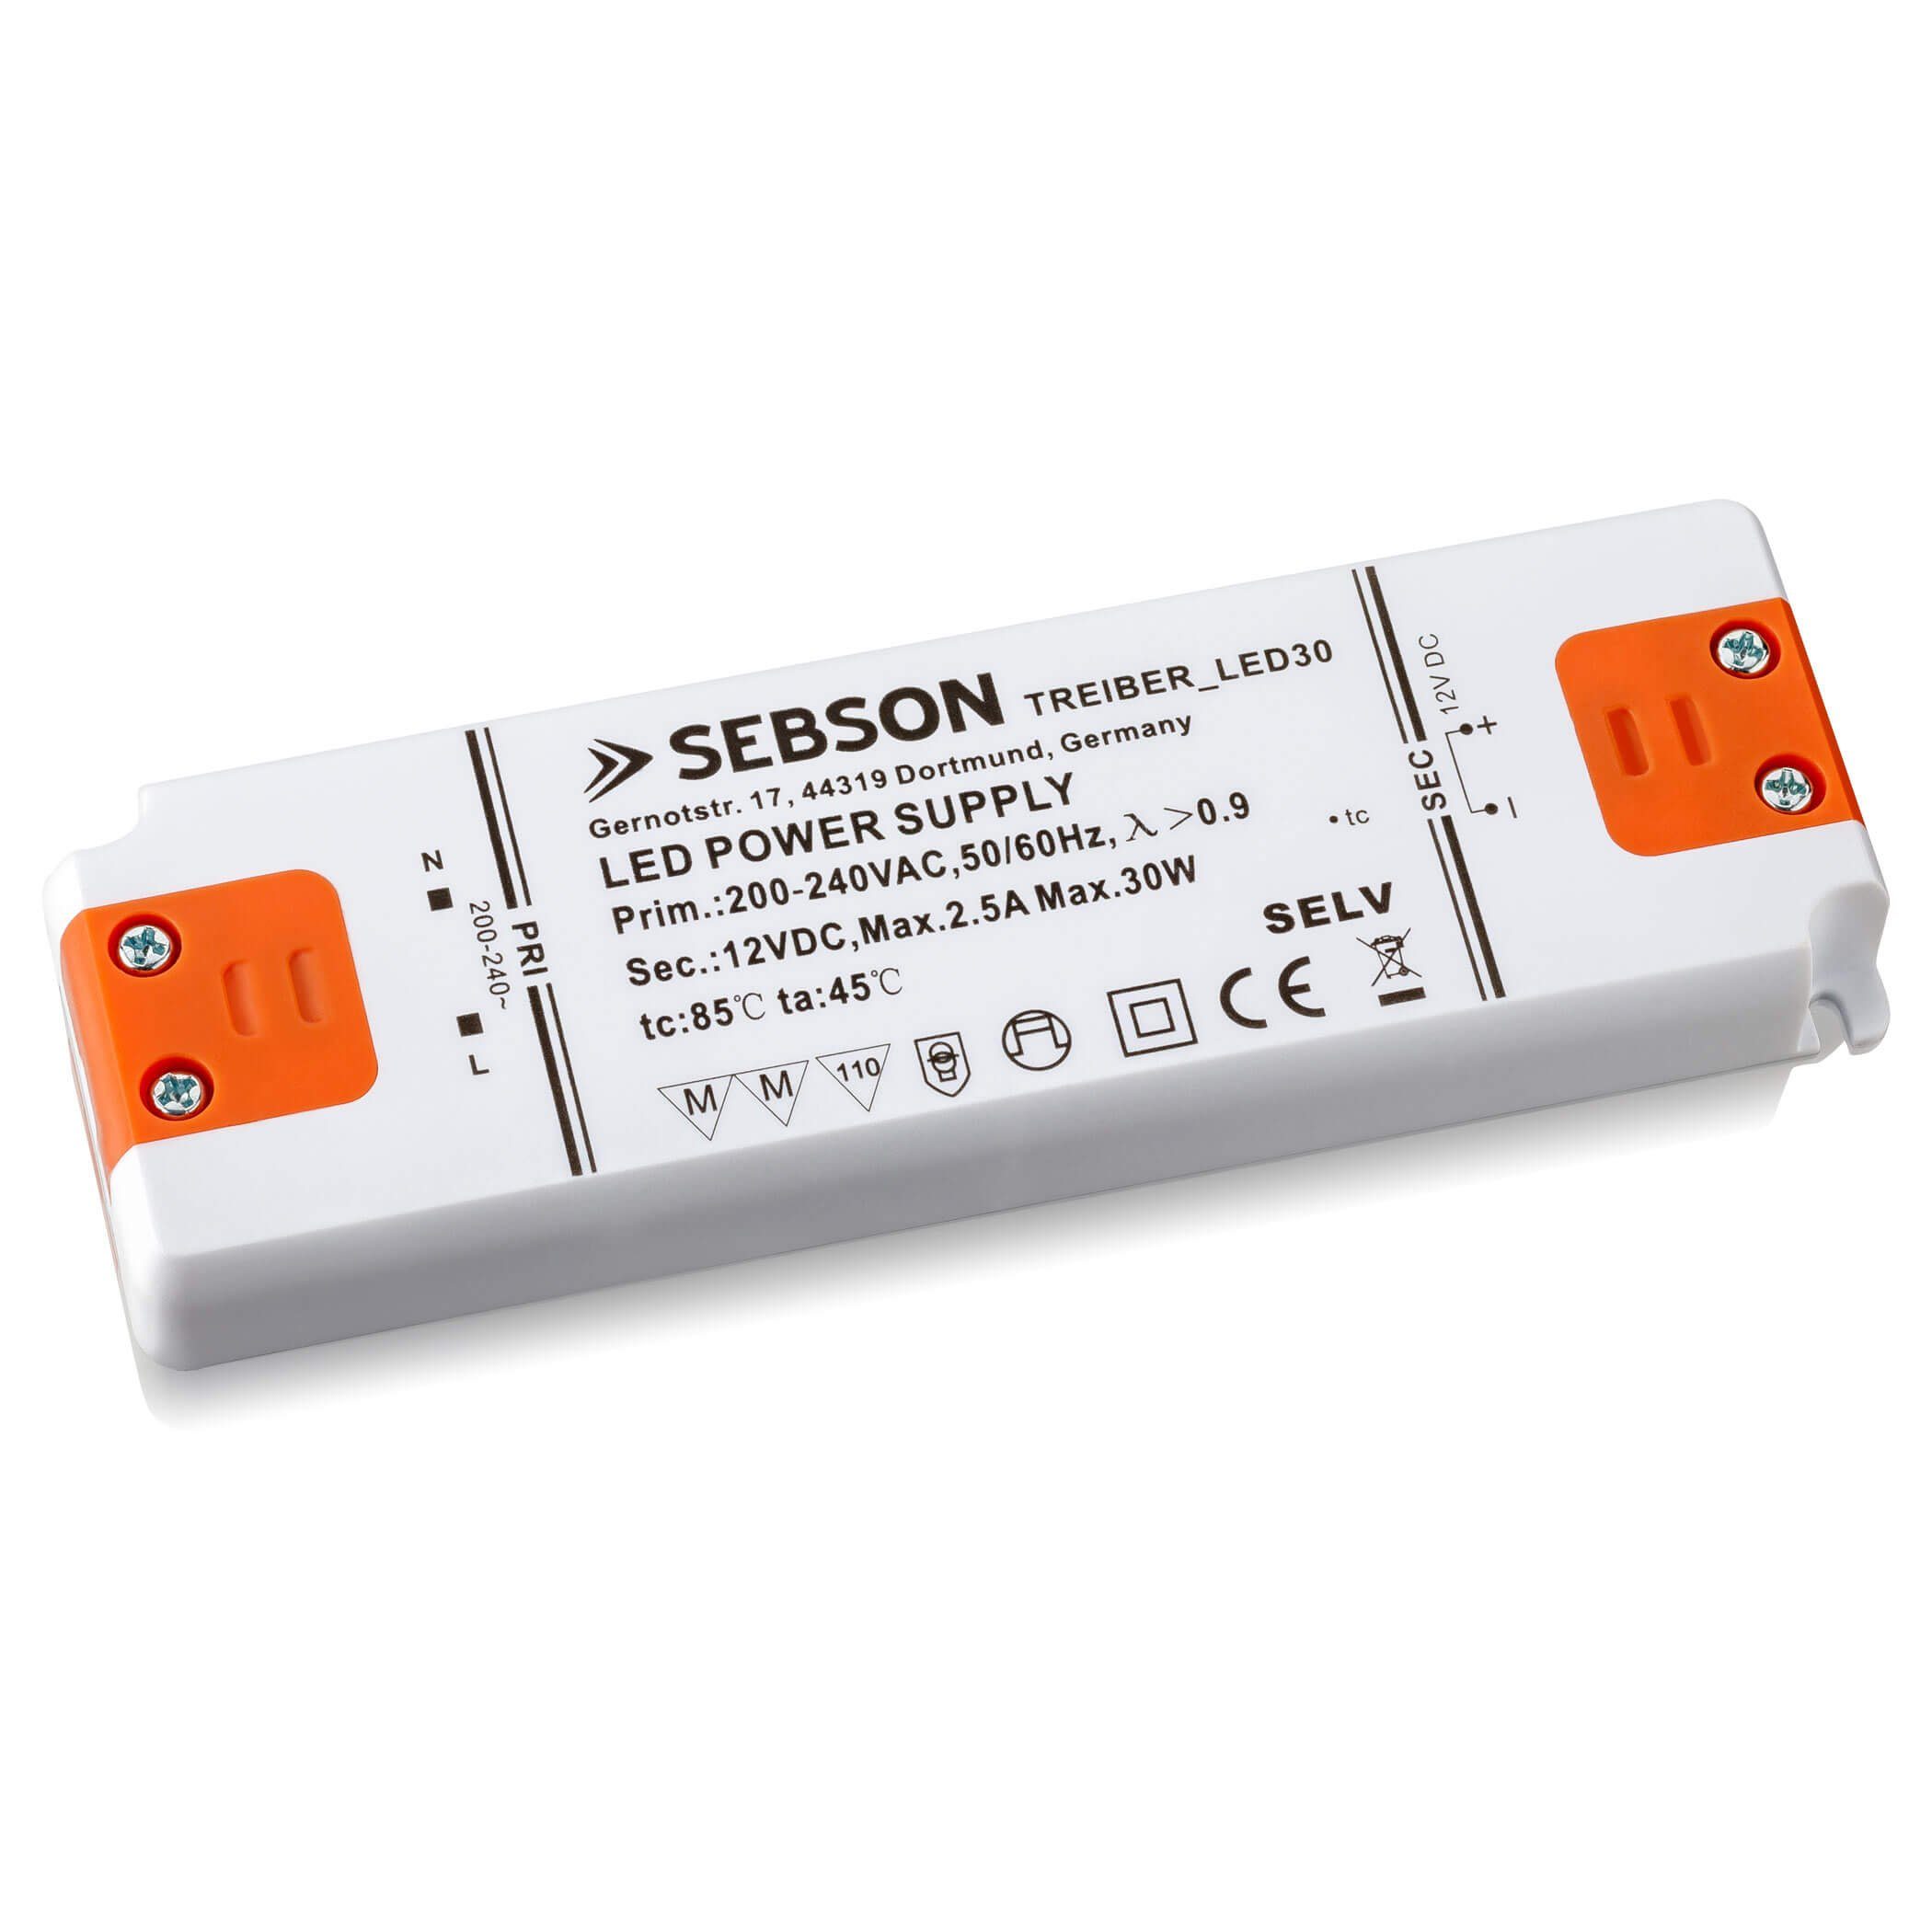 SEBSON 30W LED Treiber / LED Trafo 155x50x17mm - 12V Konstante  Ausgangsspannung, Transformator, Netzteil für LED Lampen G4, MR11, GU5.3, MR16  Trafo